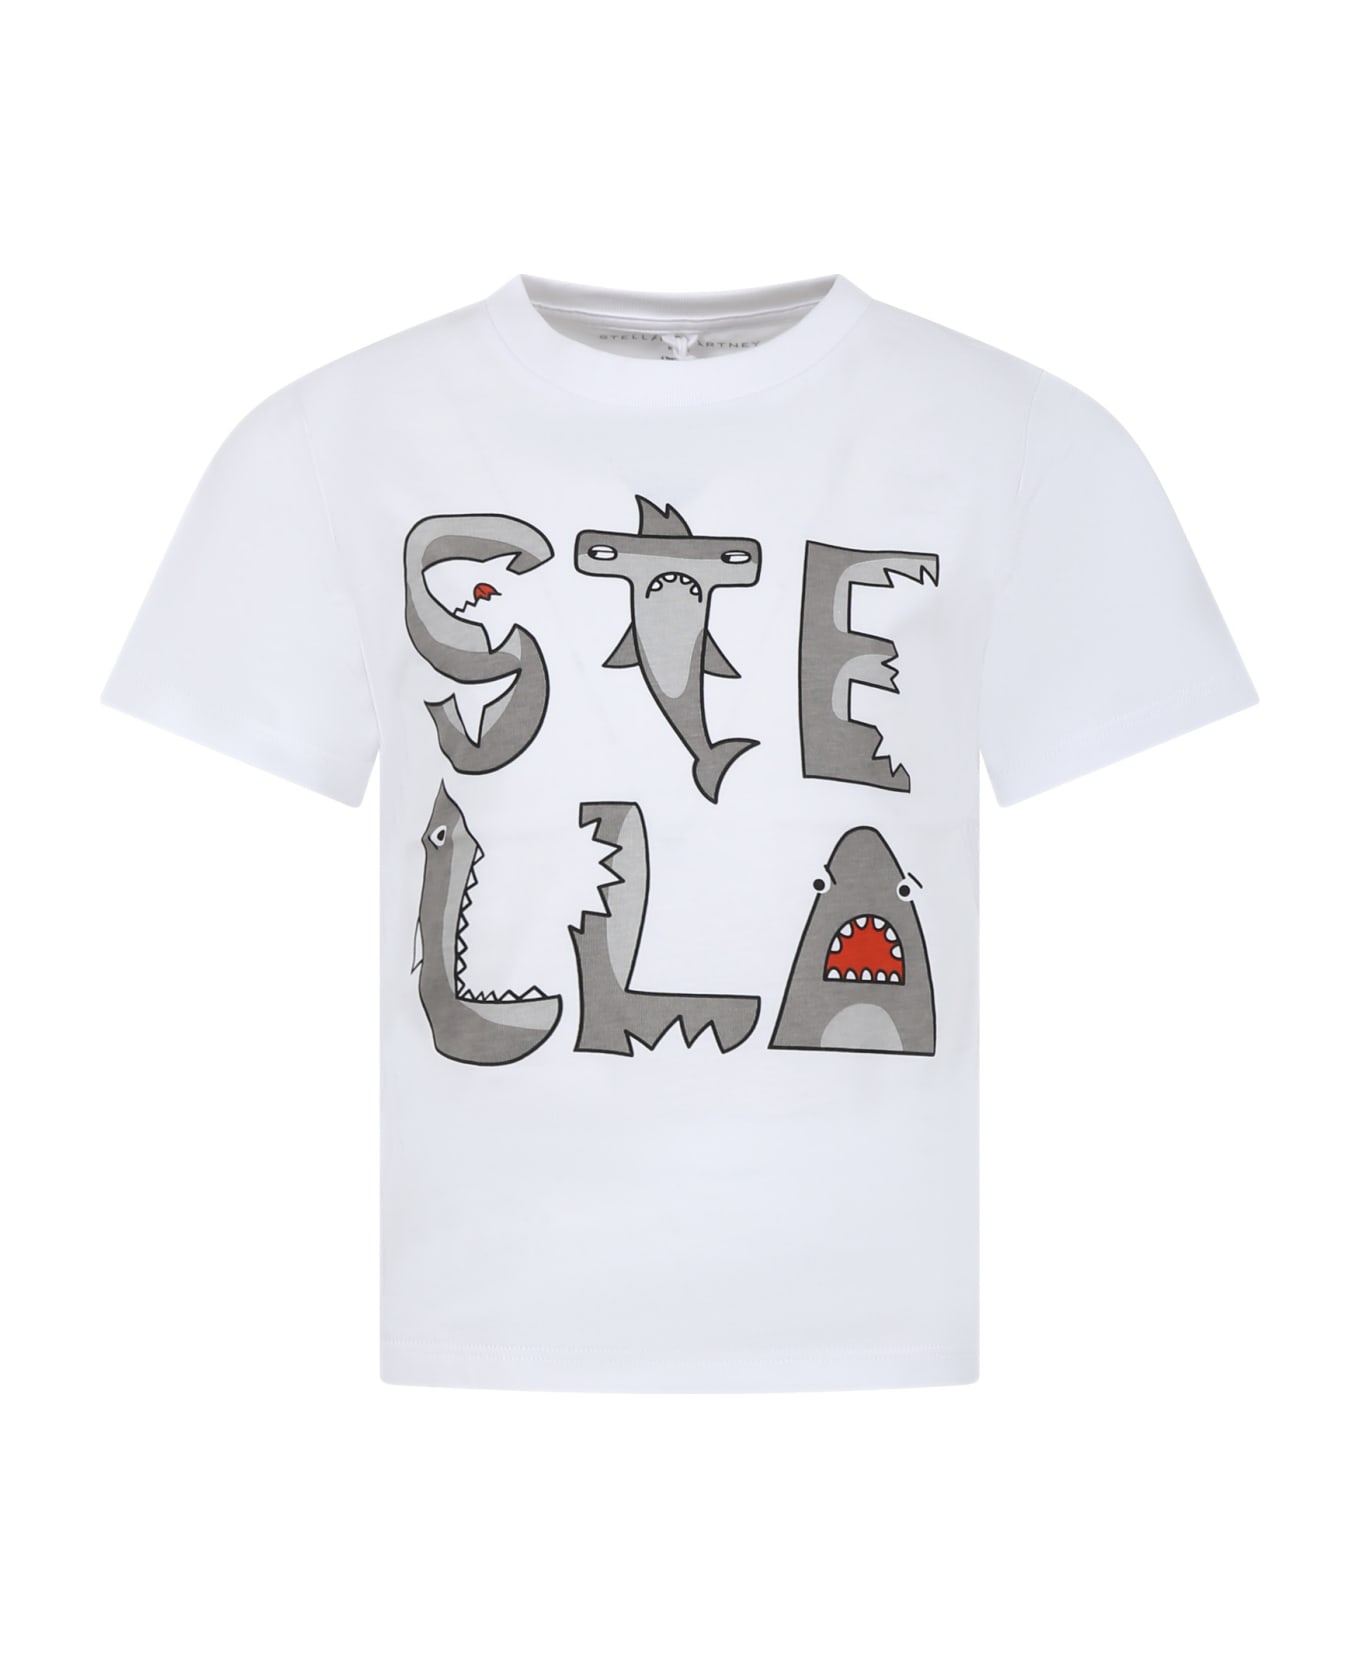 Stella McCartney White T-shirt For Boy With Print - Avorio